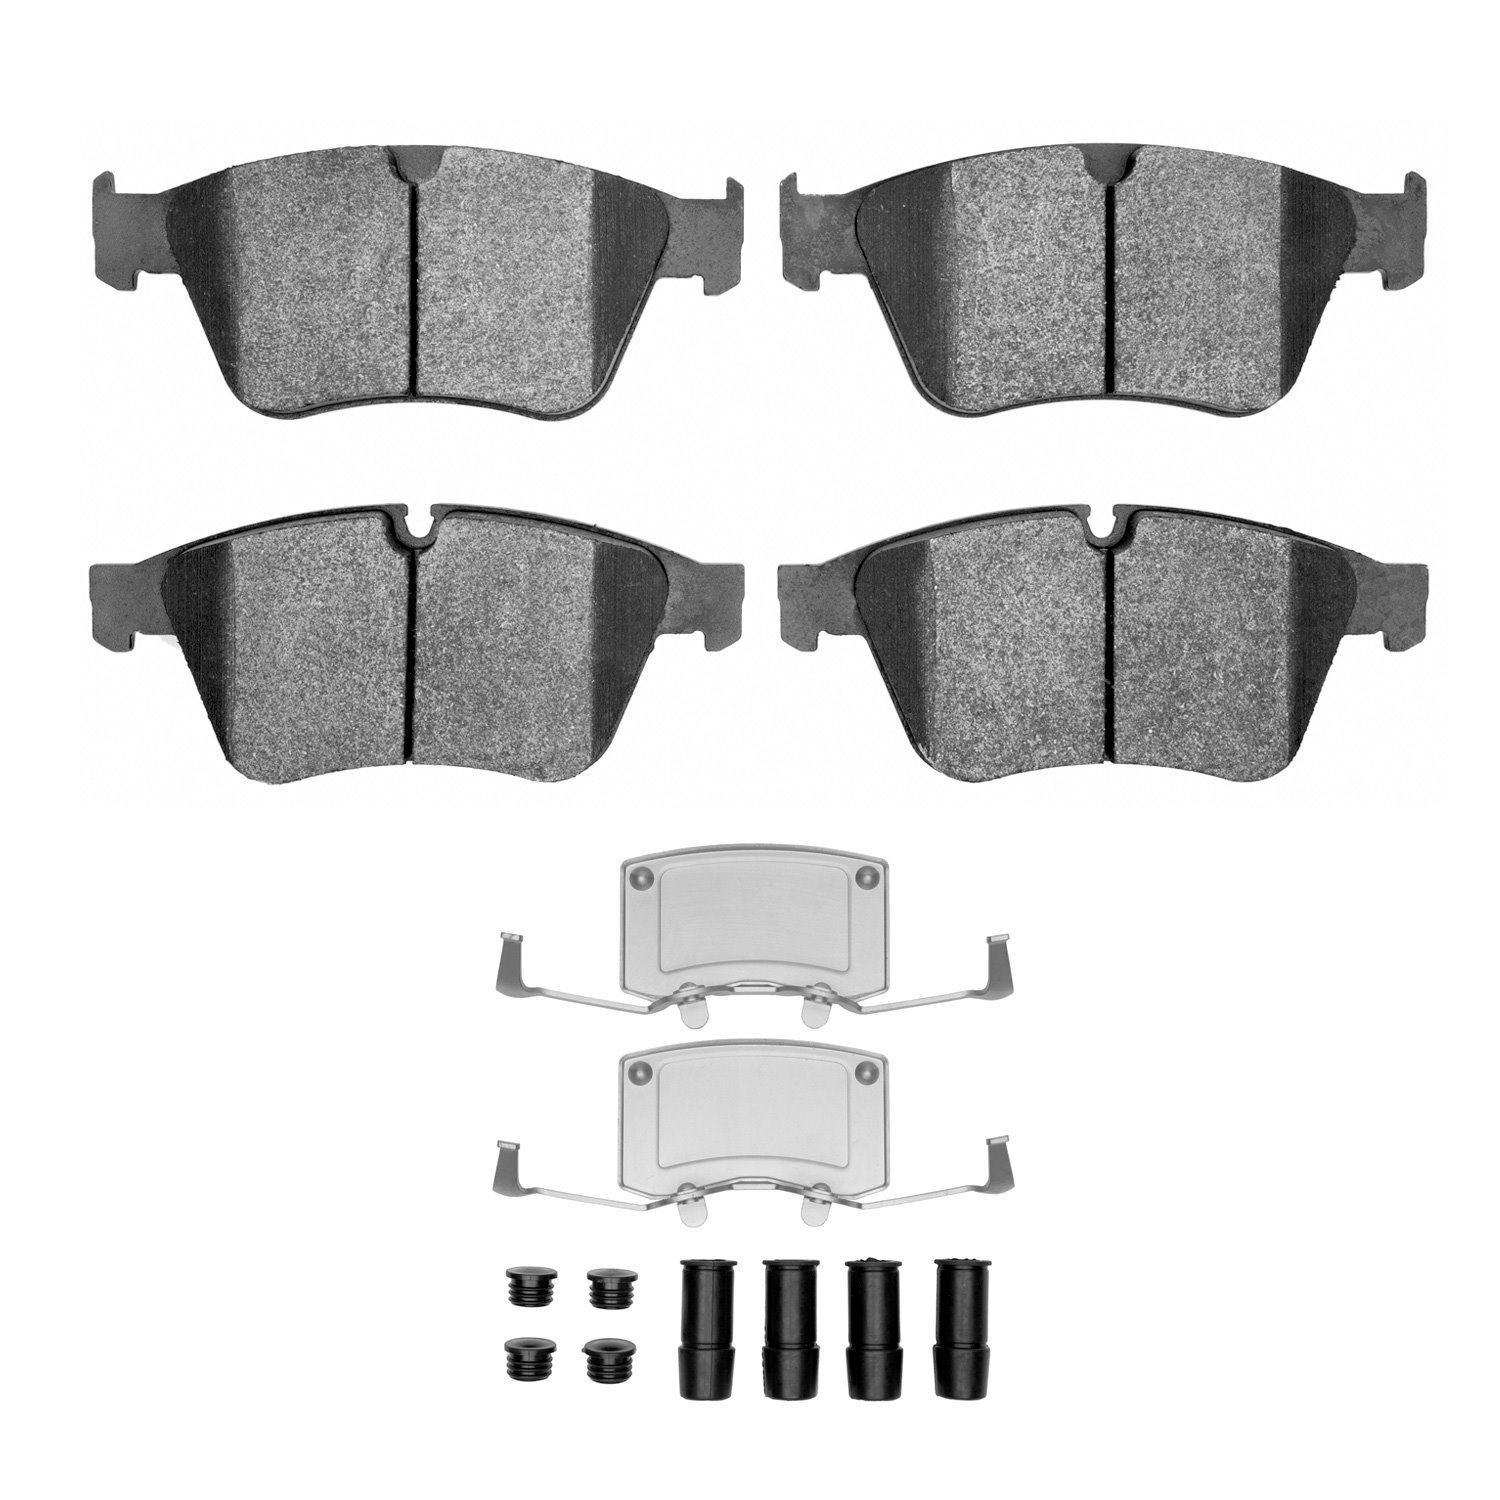 1551-1271-01 5000 Advanced Low-Metallic Brake Pads & Hardware Kit, 2007-2011 Mercedes-Benz, Position: Front